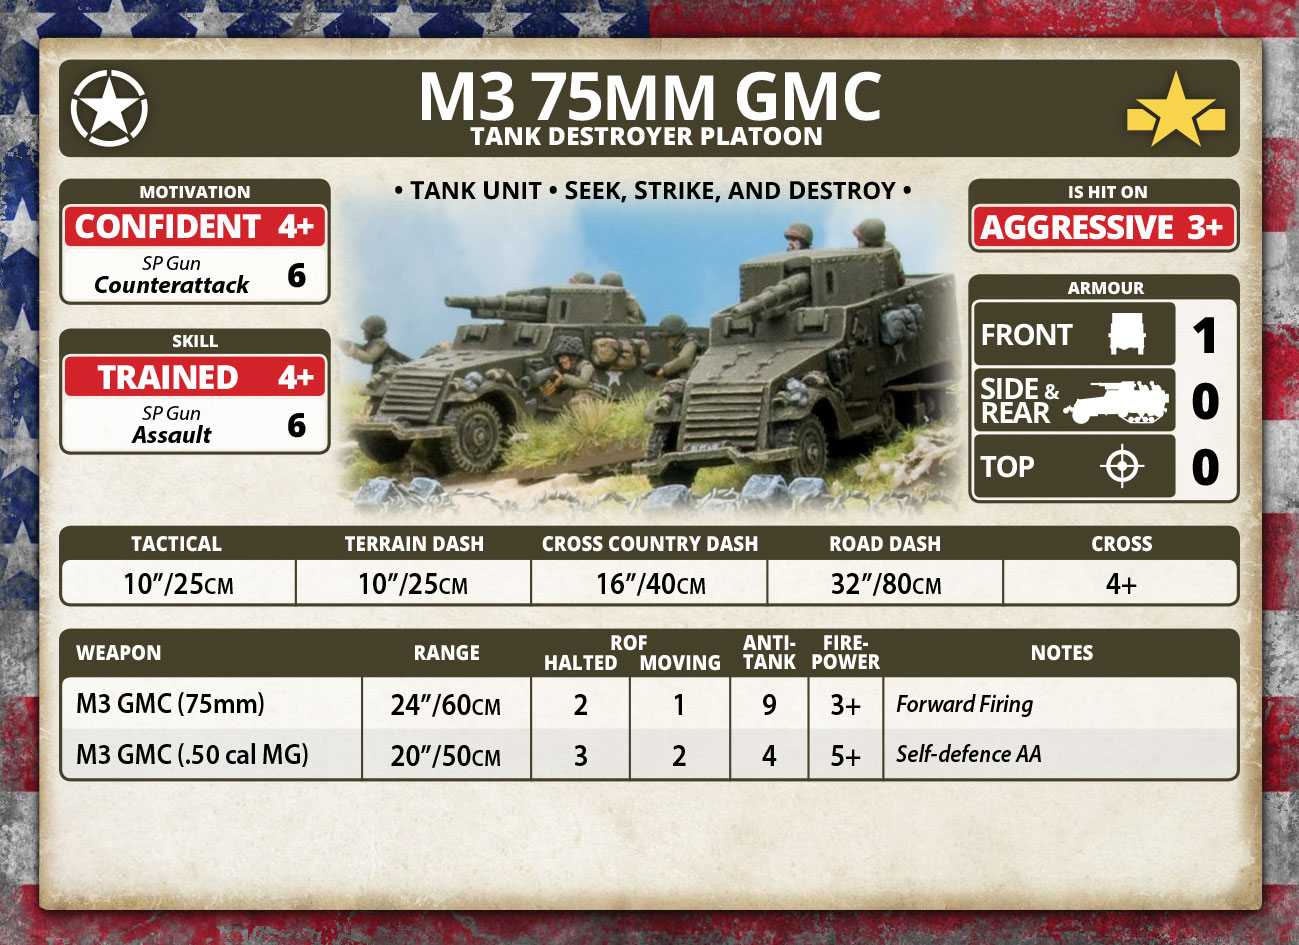 The M3 75mm GMC